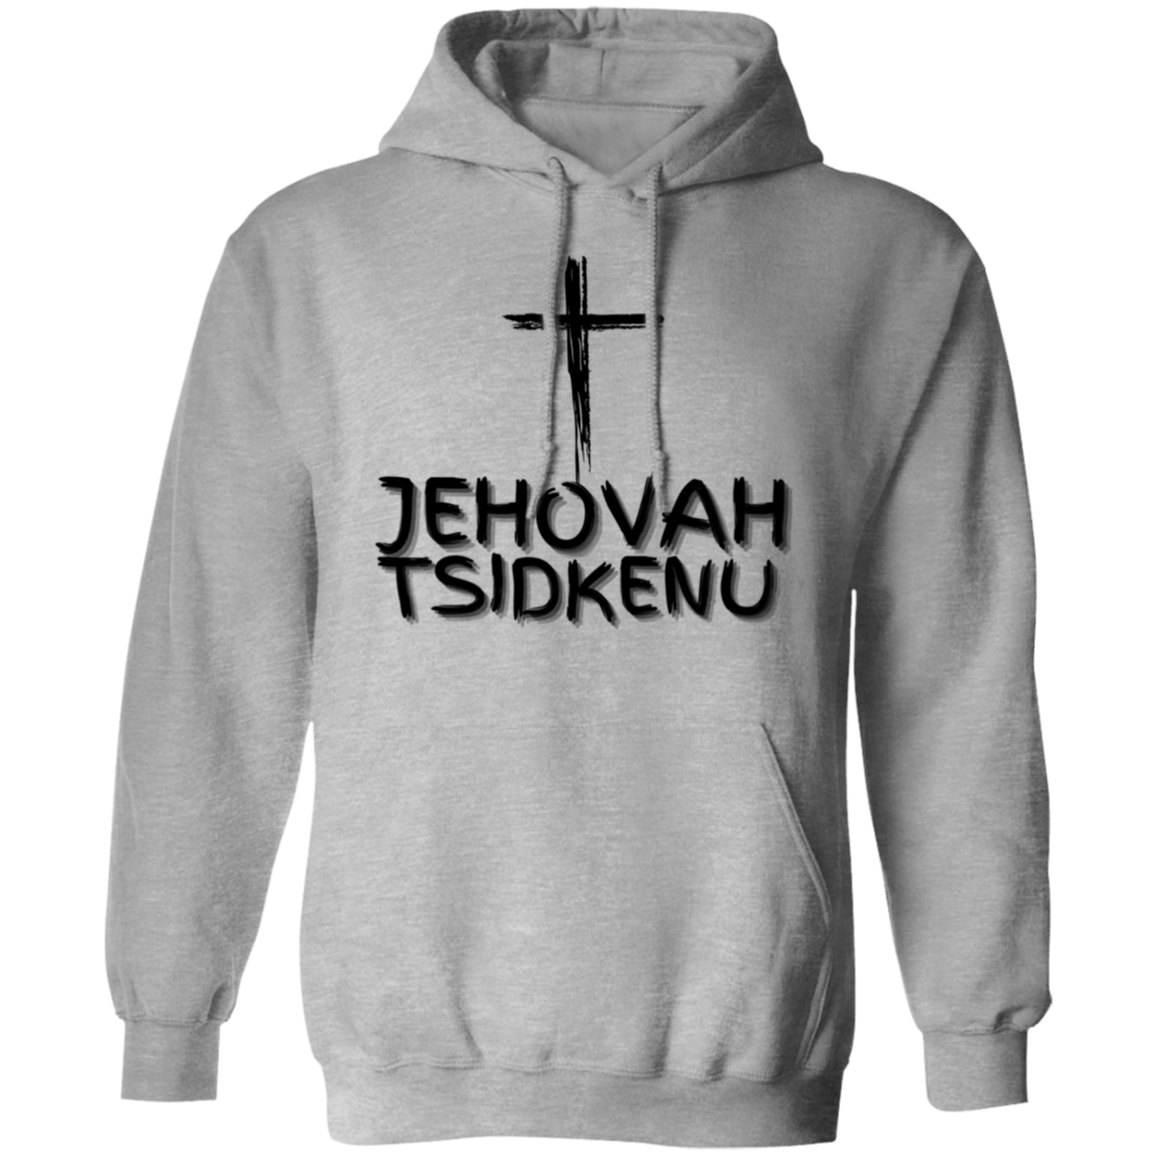 Jehovah Tsidkenu Pullover Hoodie Front & Back - Black